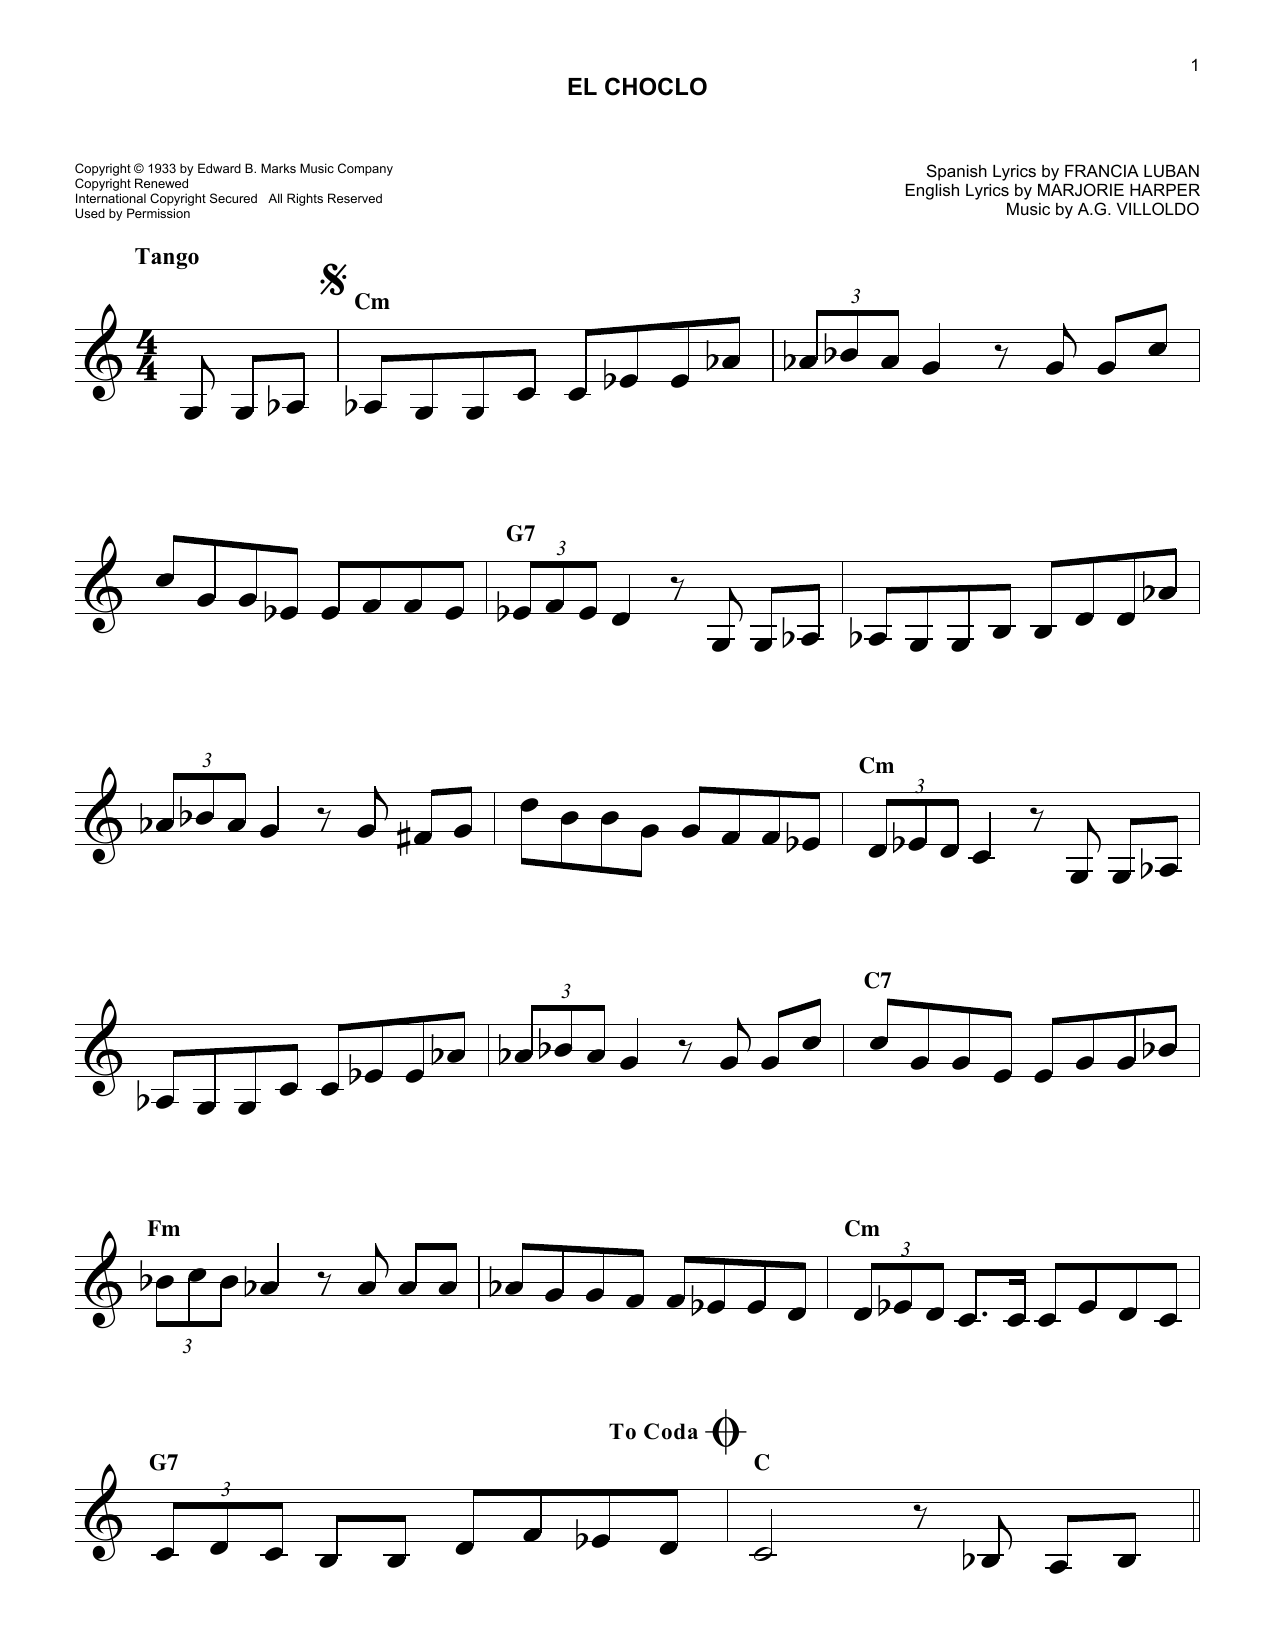 A.G. Villoldo El Choclo sheet music notes and chords arranged for Lead Sheet / Fake Book